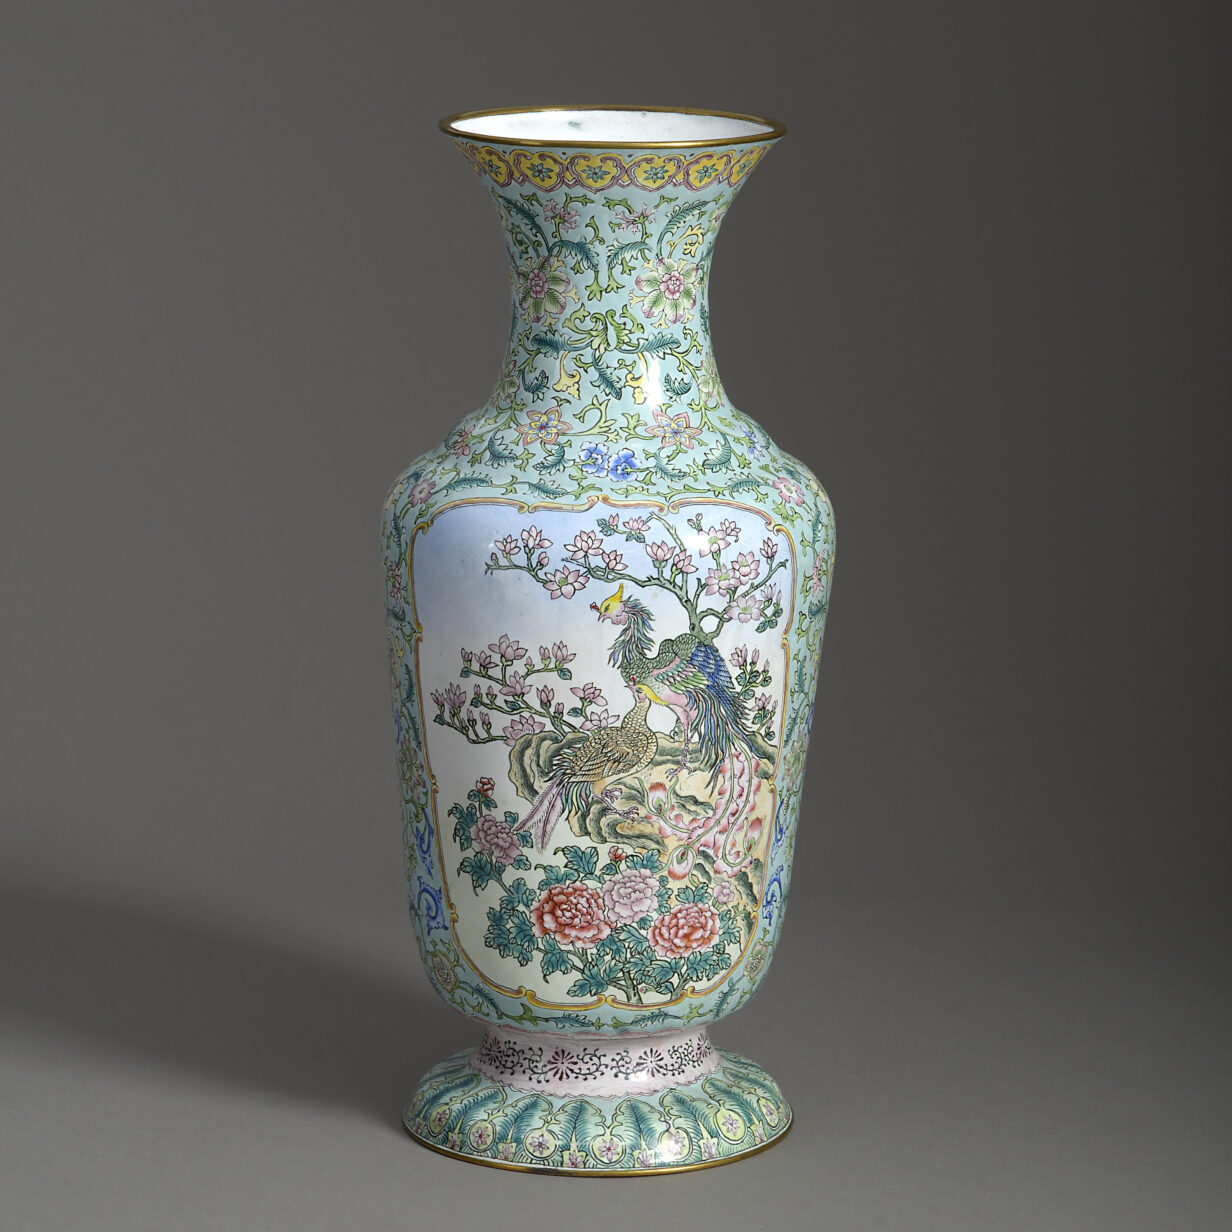 20th century republic period canton enamel vase